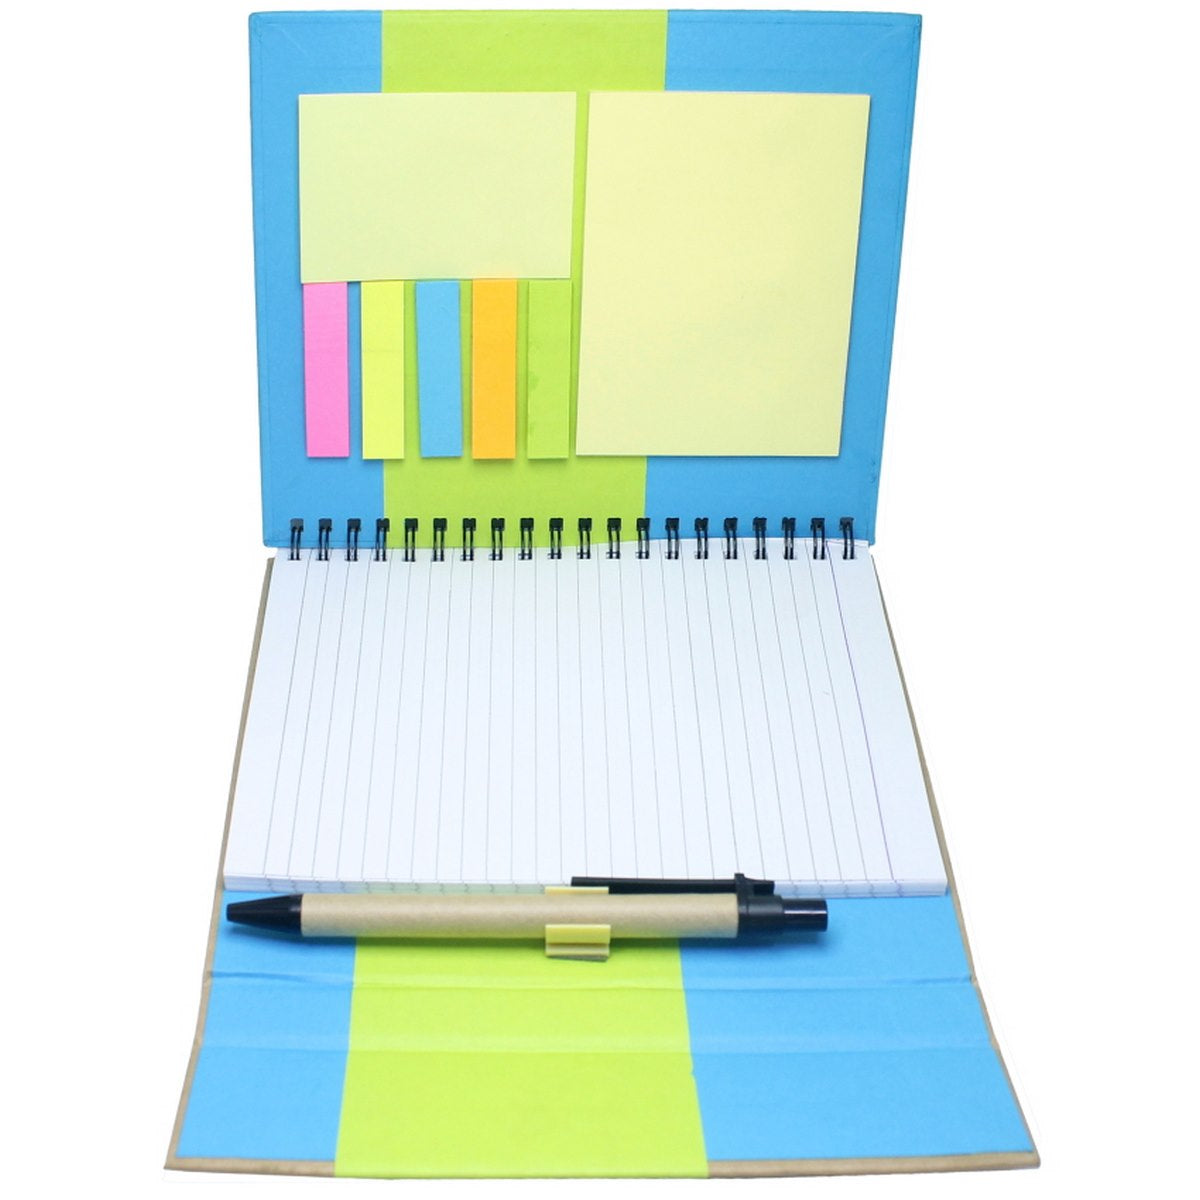 jags-mumbai Notebooks & Diaries EcoFriendly Memo Pad Calendar Colour M014C